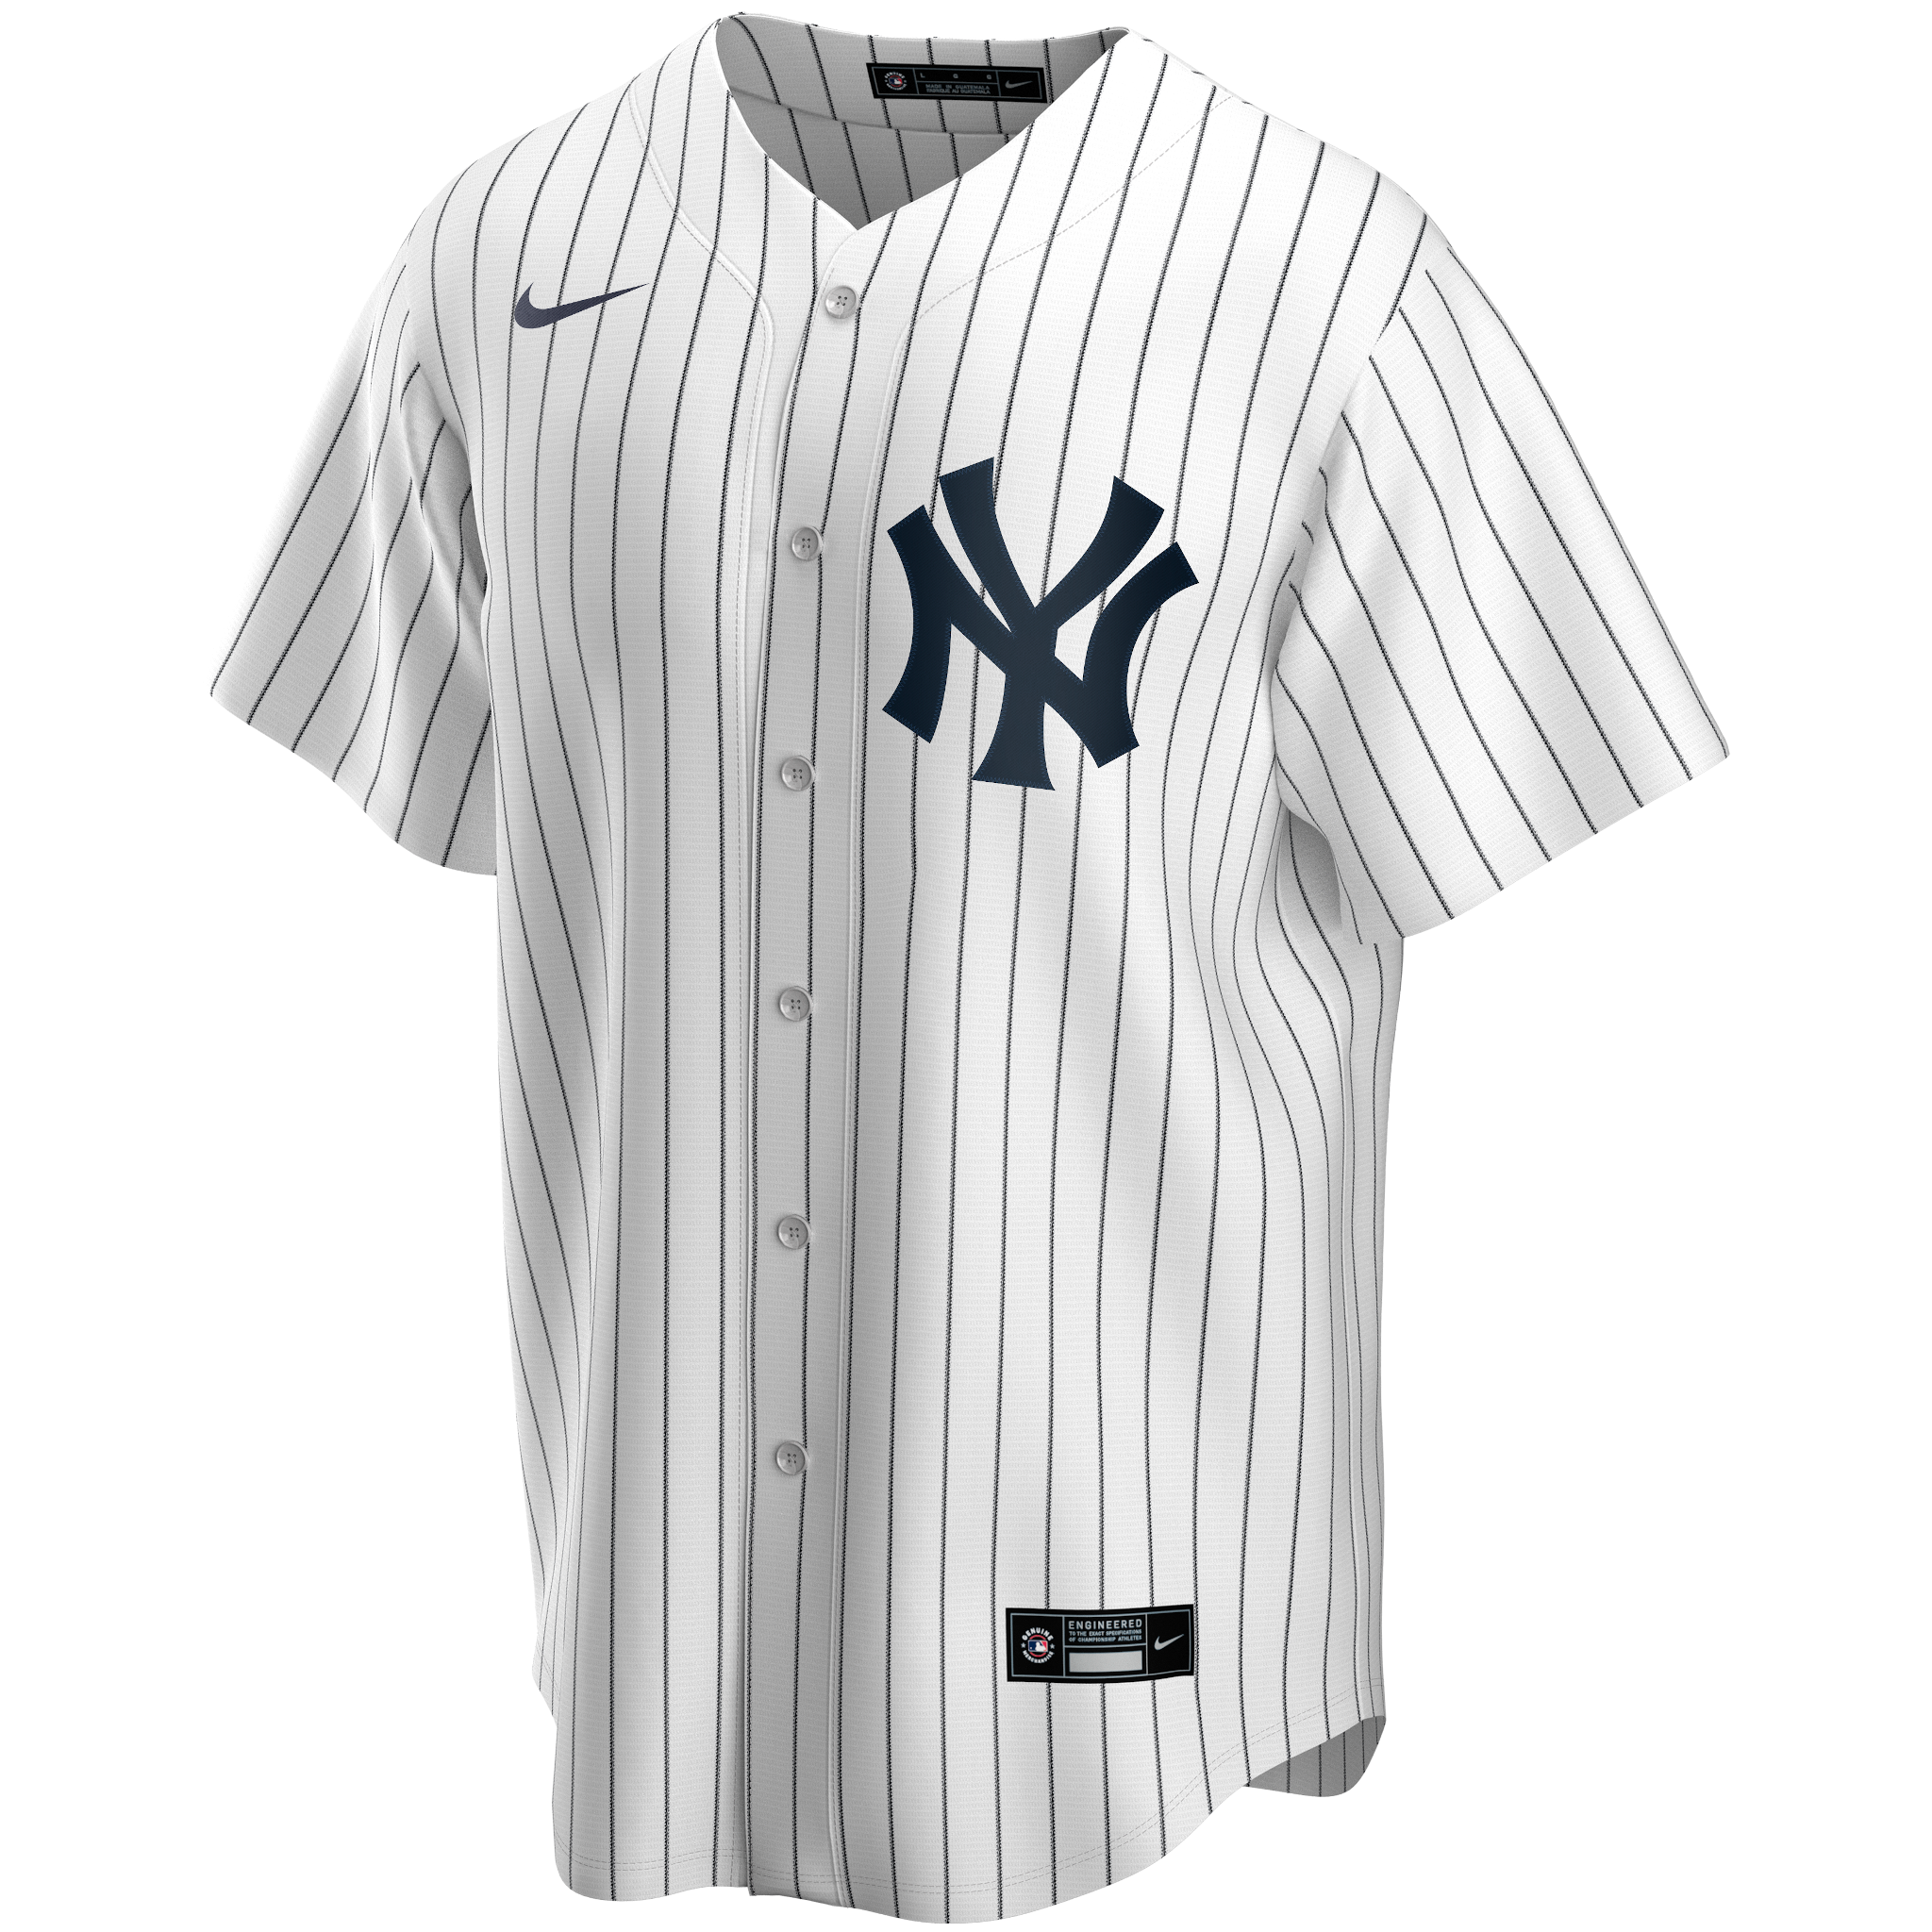 Nike Kyle Higashioka No Name Jersey - NY Yankees Number Only Jersey